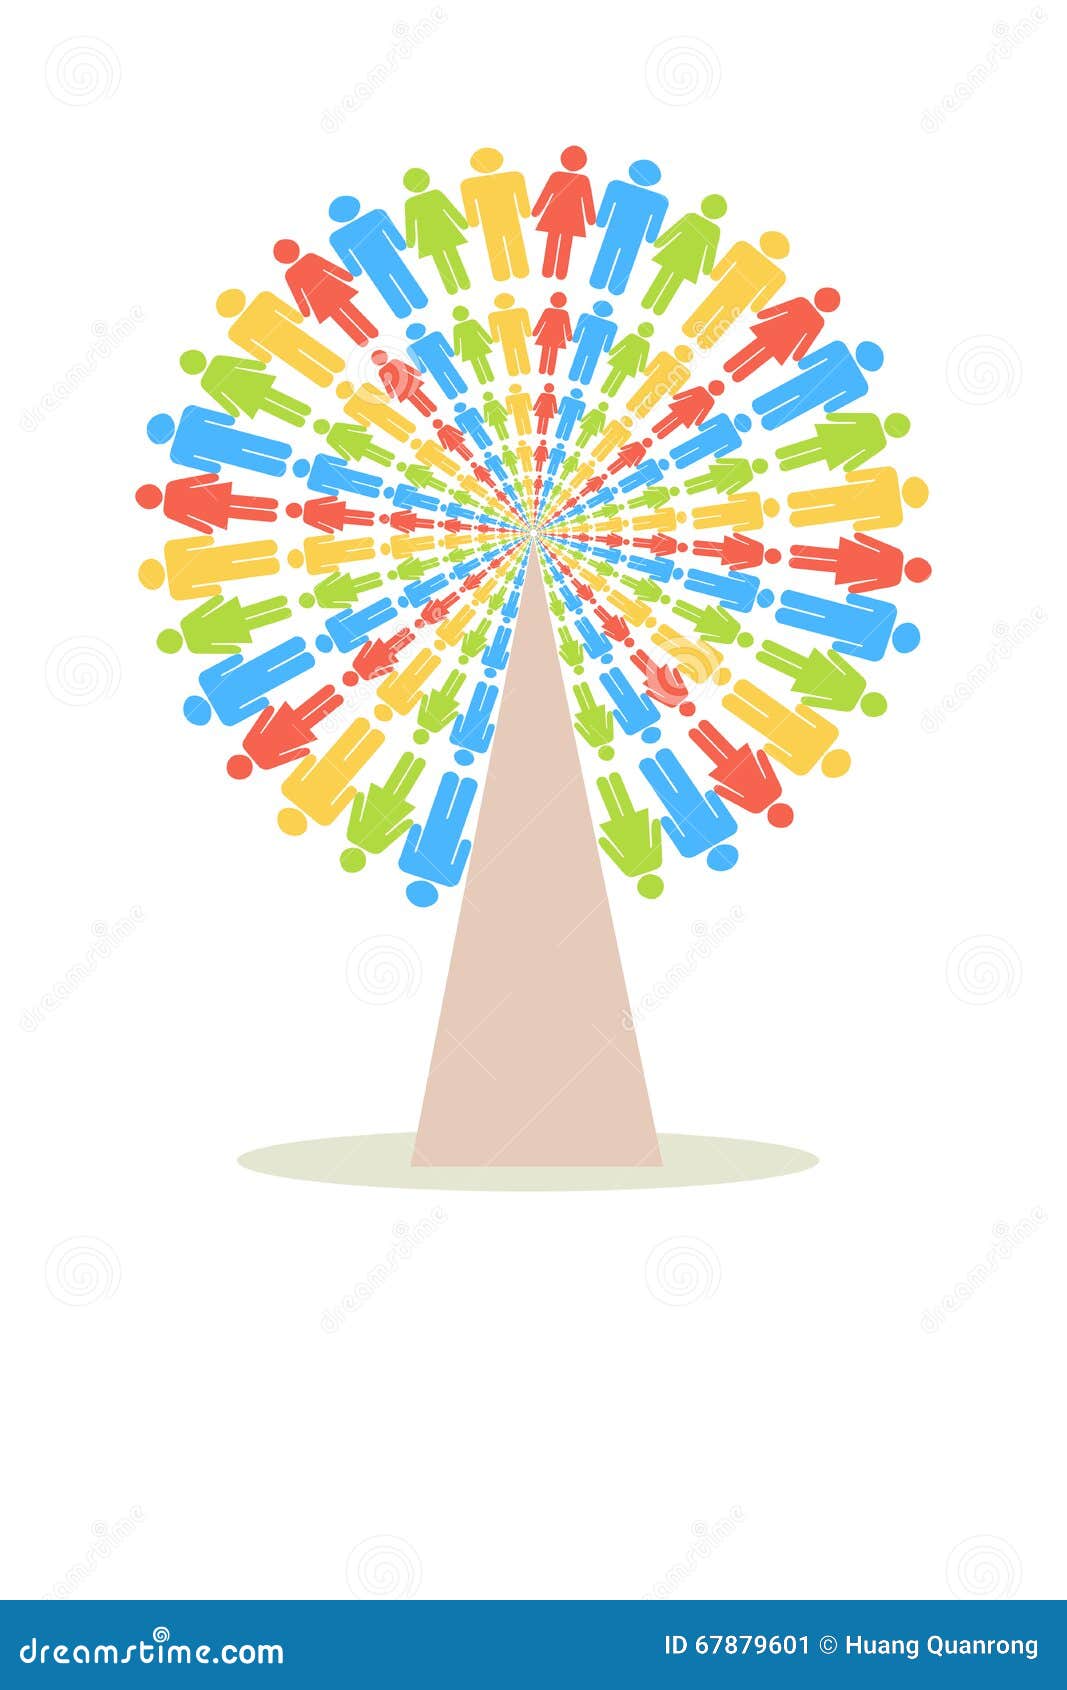 colour people tree